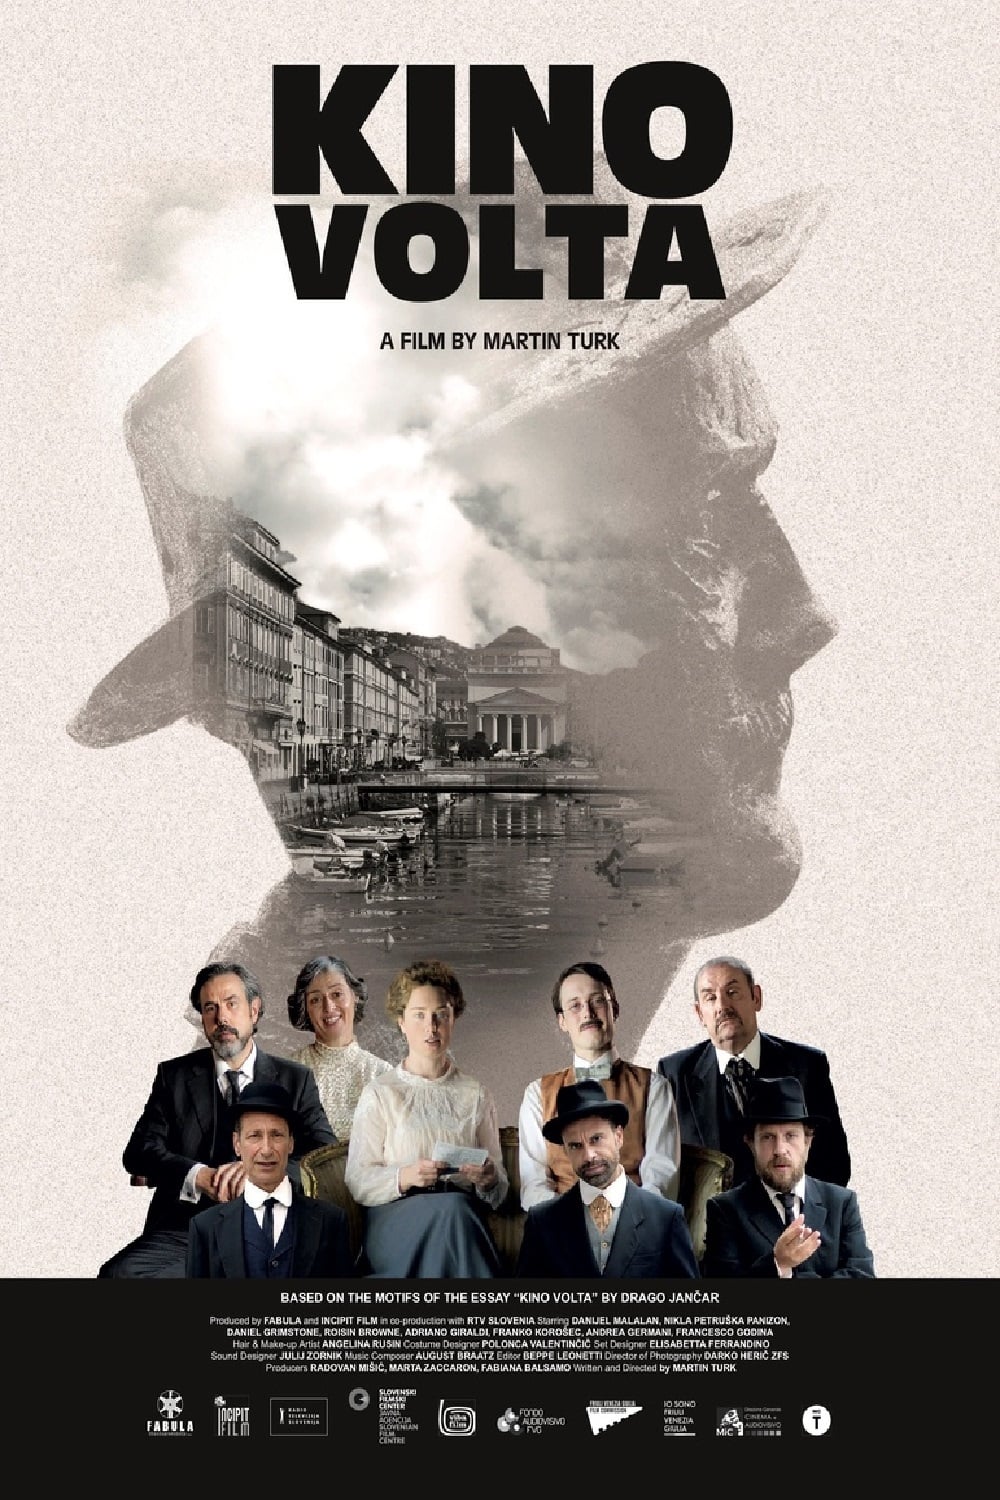 Kino Volta